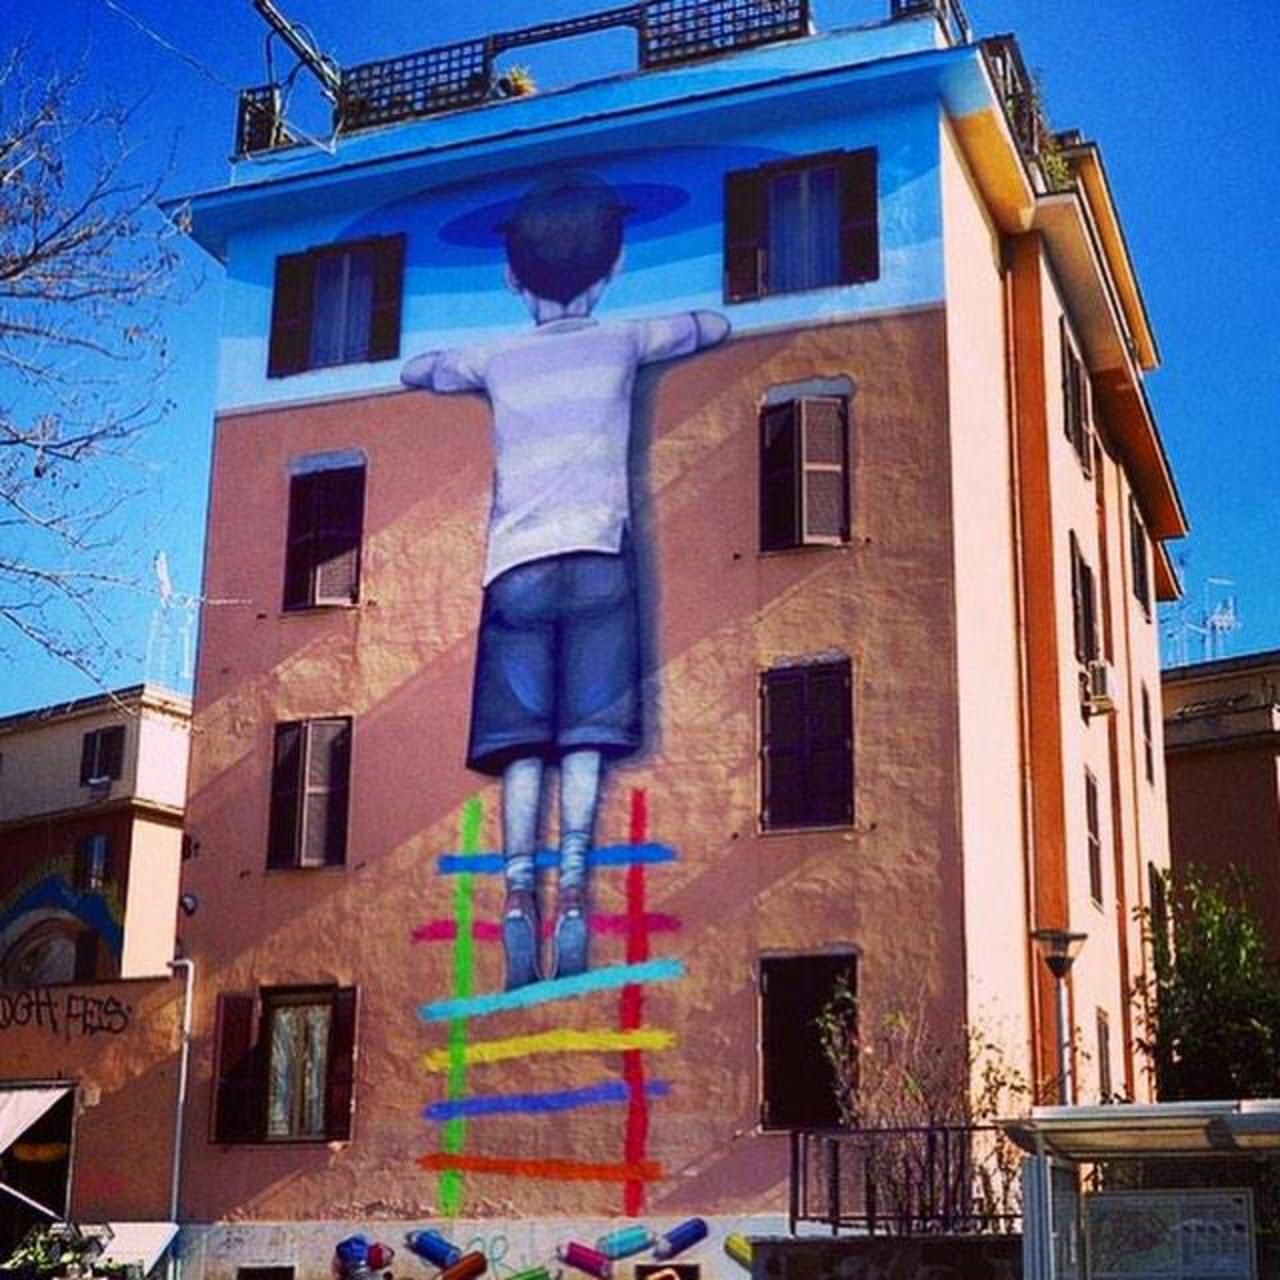 "Il Bambino Redemptor" by @seth_globepainter in Rome, #Italy #mural #graffiti #urbanart #streetart http://t.co/ndA8RelVCQ